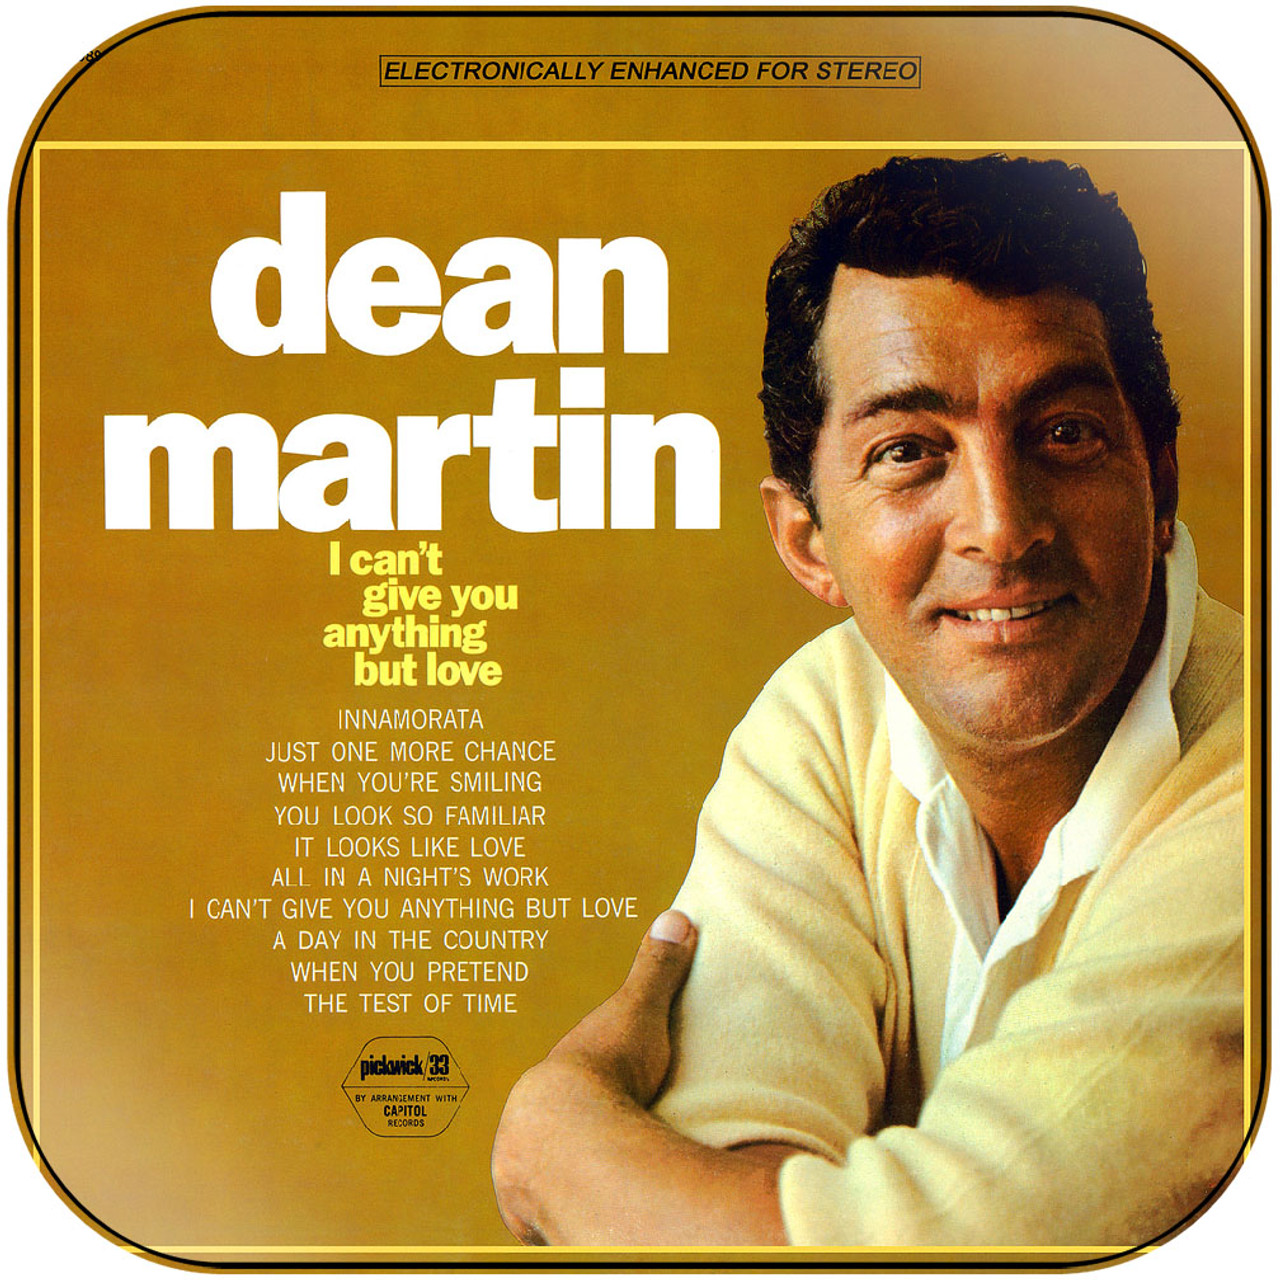 Dean Martin discography - Wikipedia